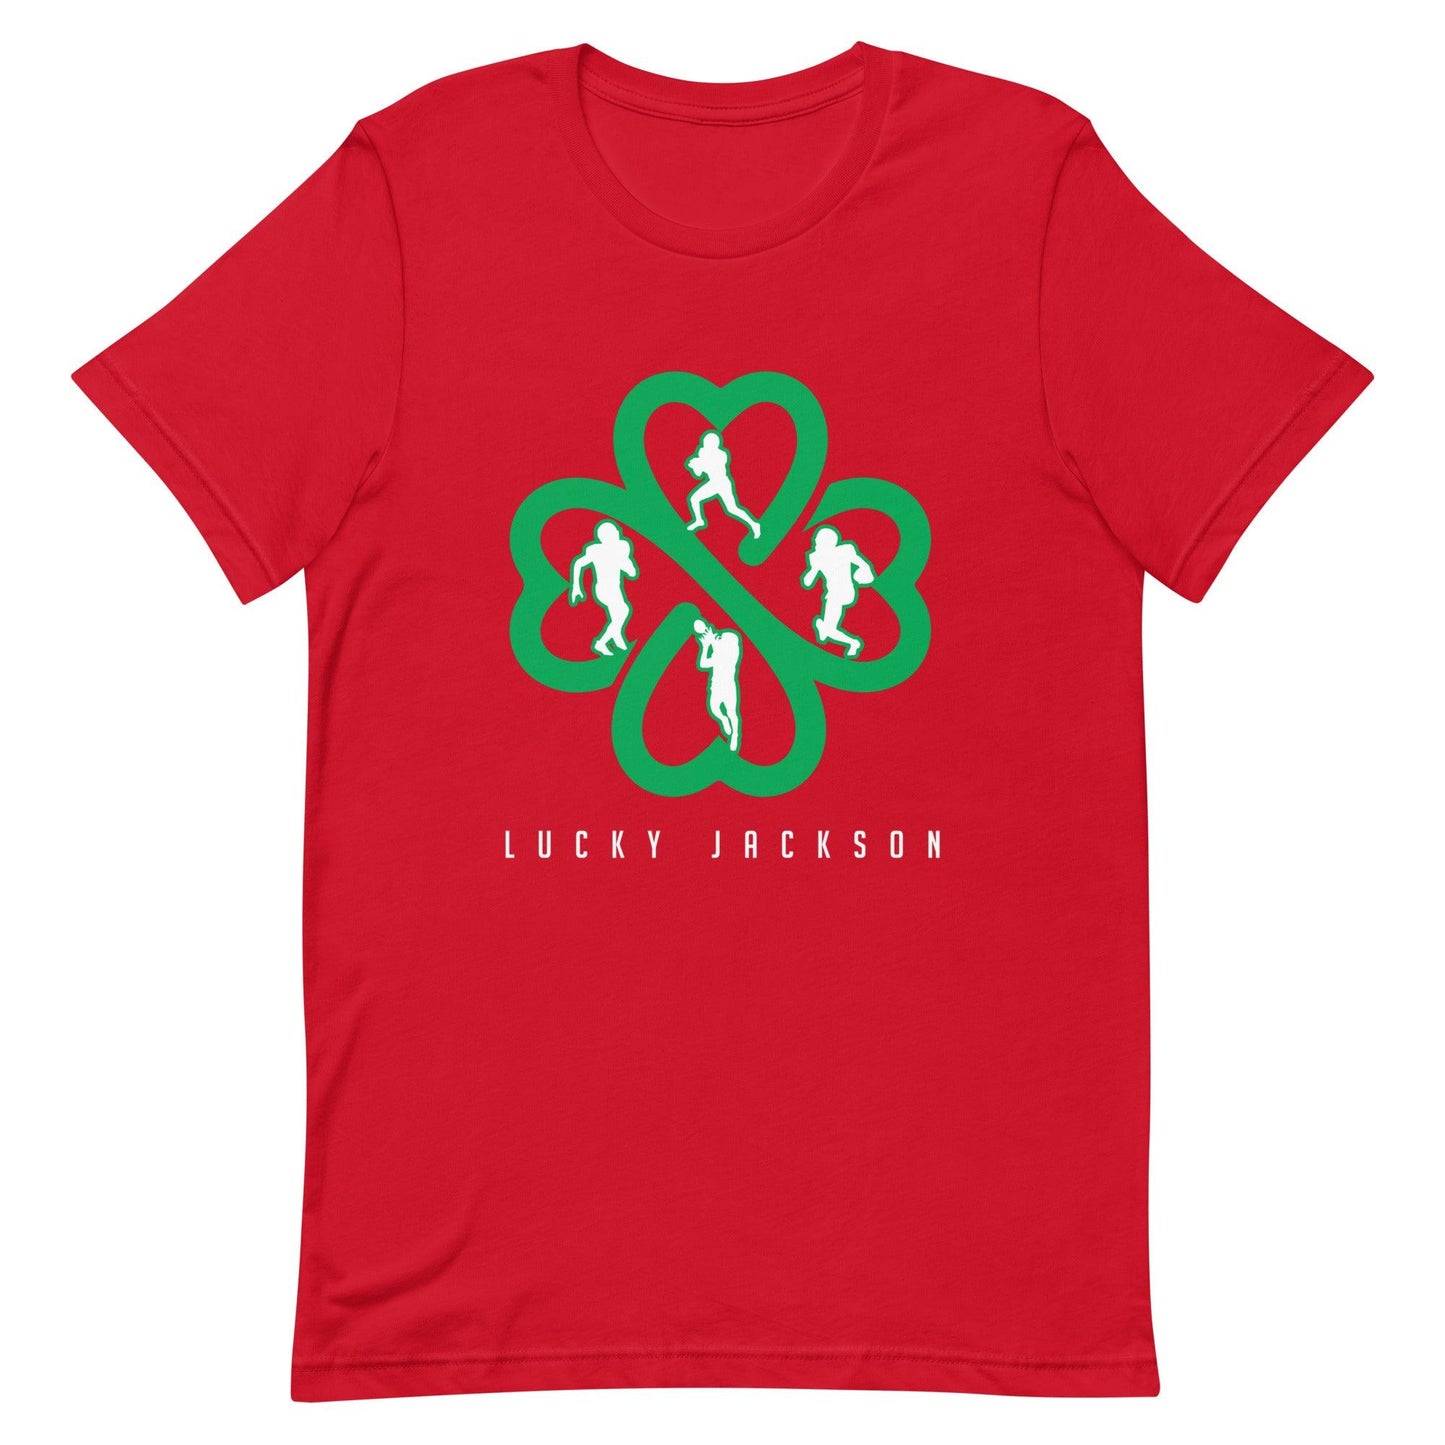 Lucky Jackson "Elite" t-shirt - Fan Arch